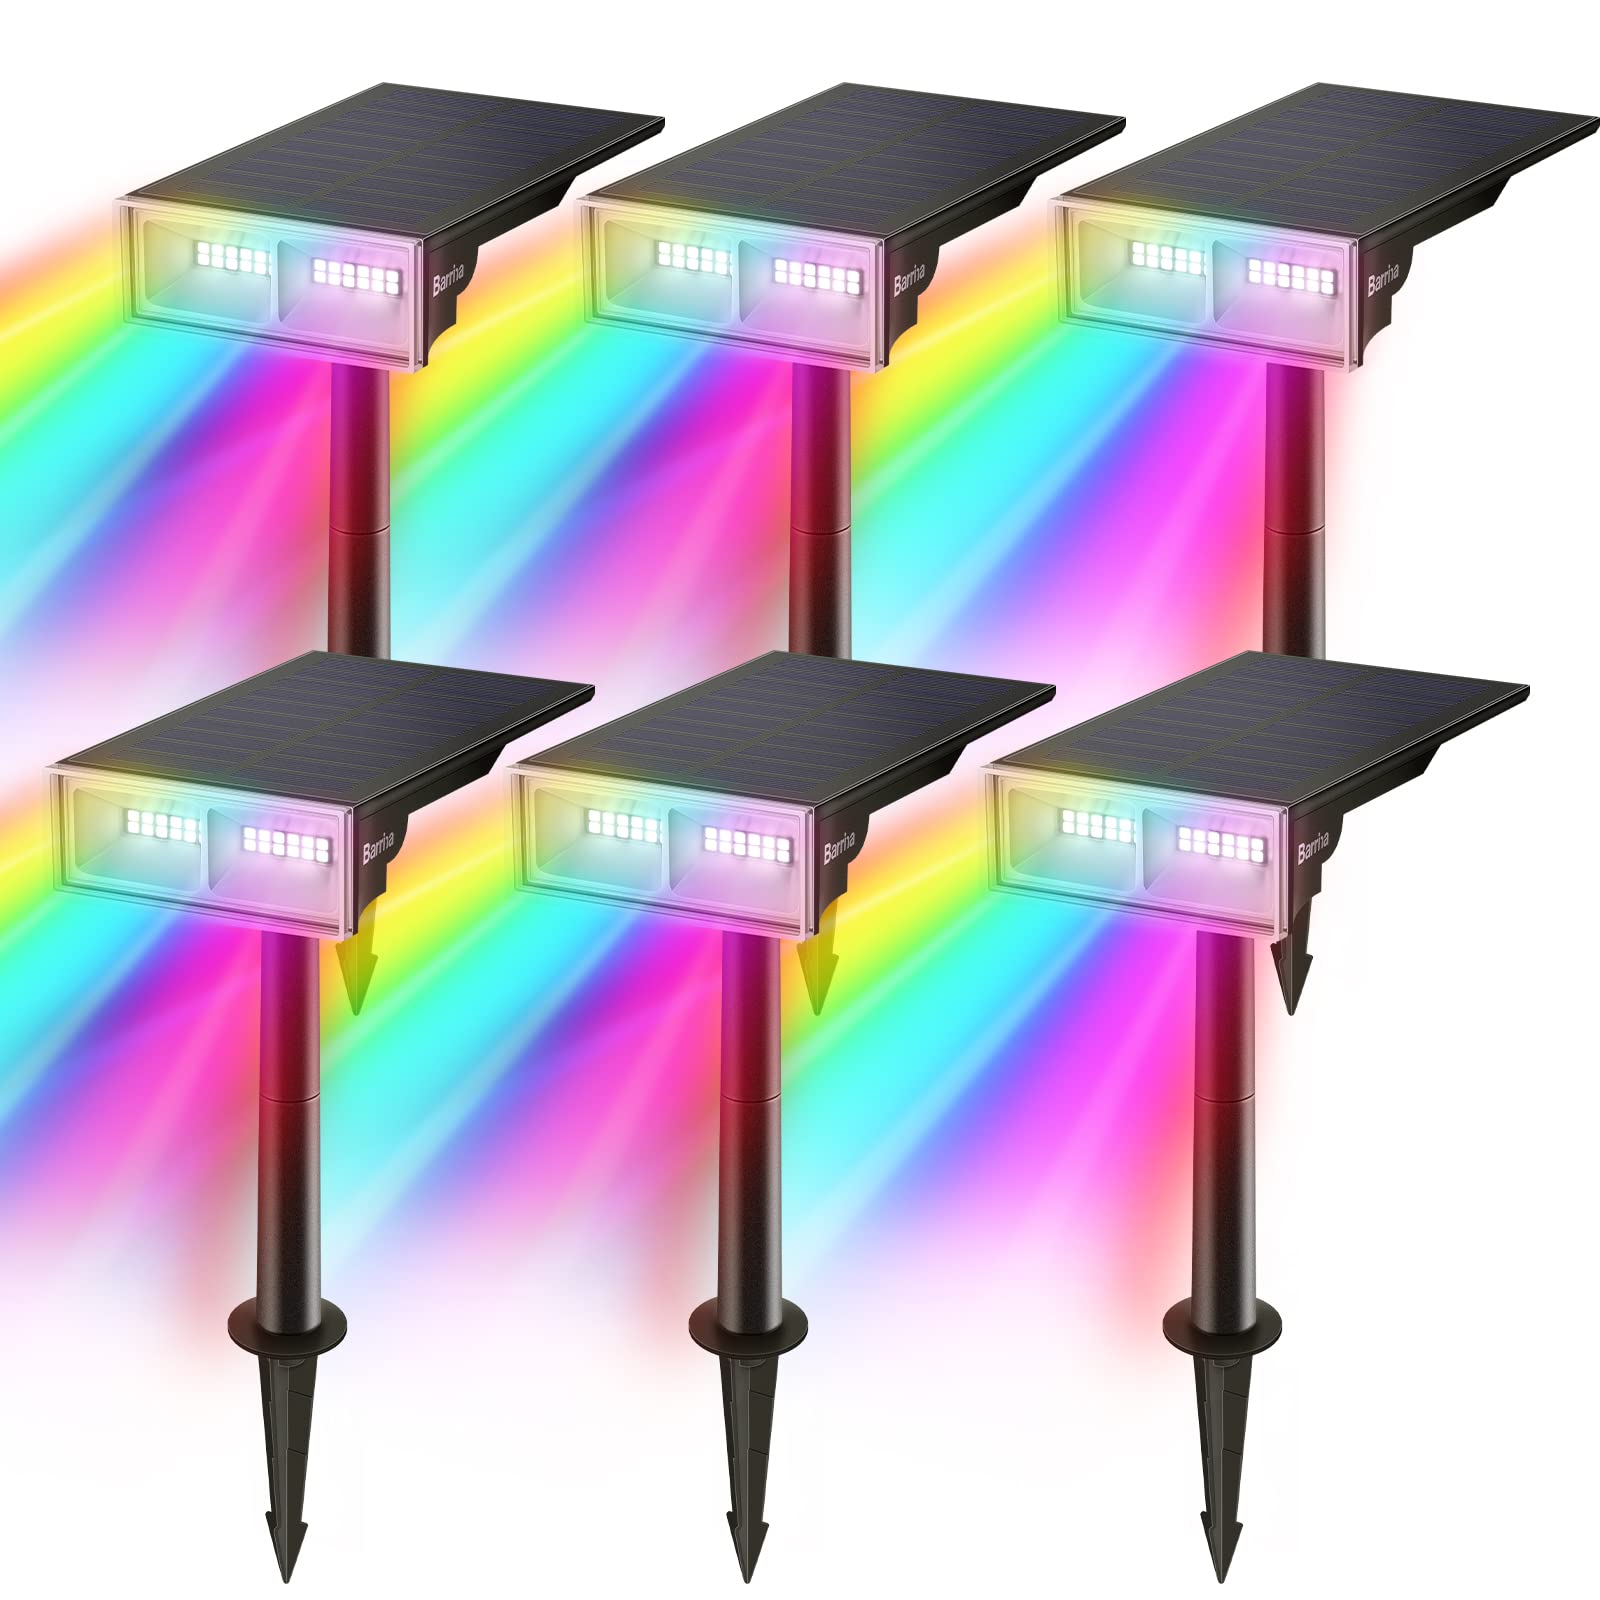 Solar Spot Lights,RGB 8 Colorful Modes,Auto ON/OFF,24 LEDs,6 Packs,TYN RGB 6 - Barrina led